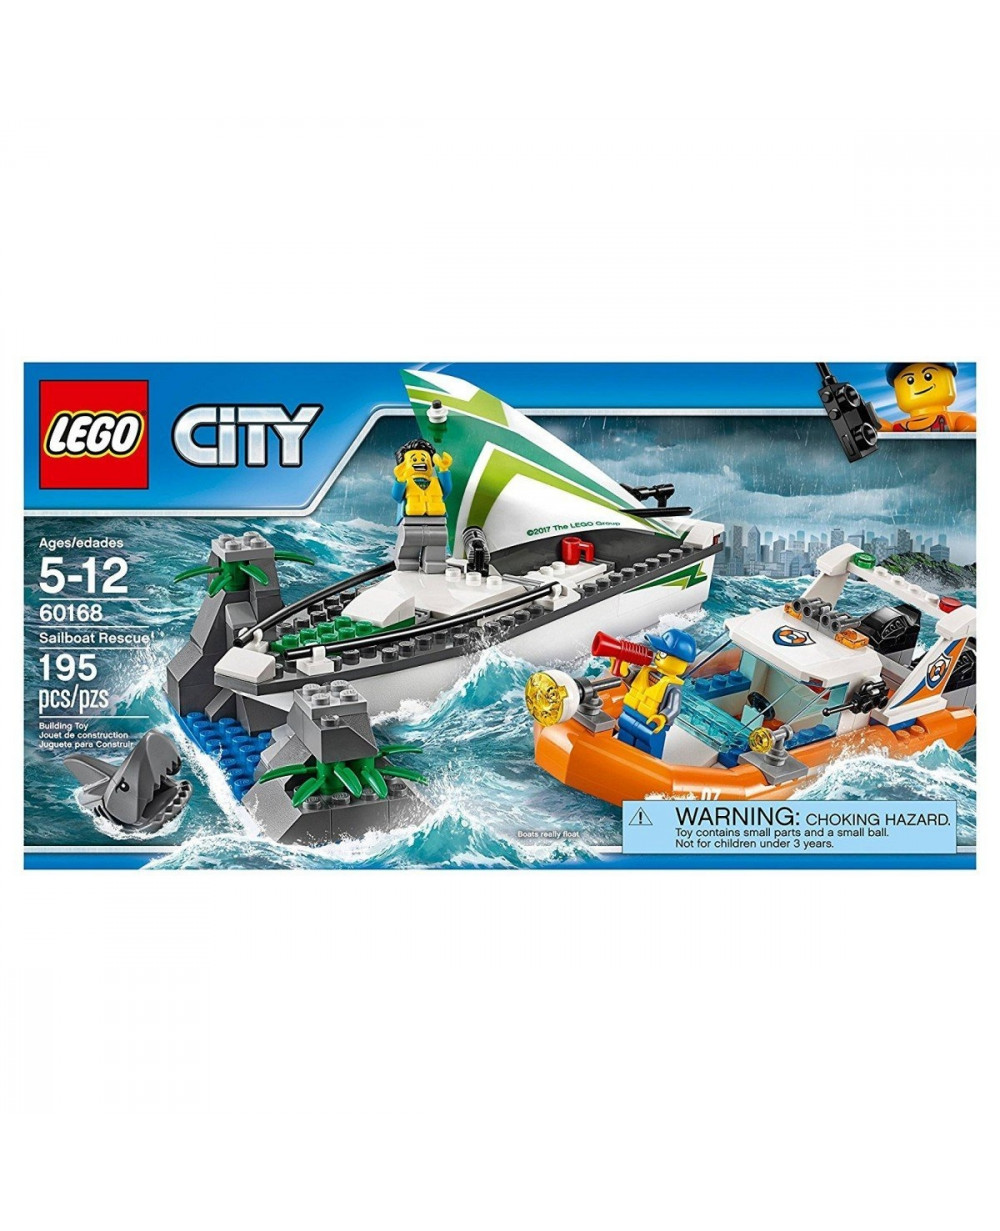 feed Render Revocation LEGO 60168 City Coast Guard Sailboat Rescue